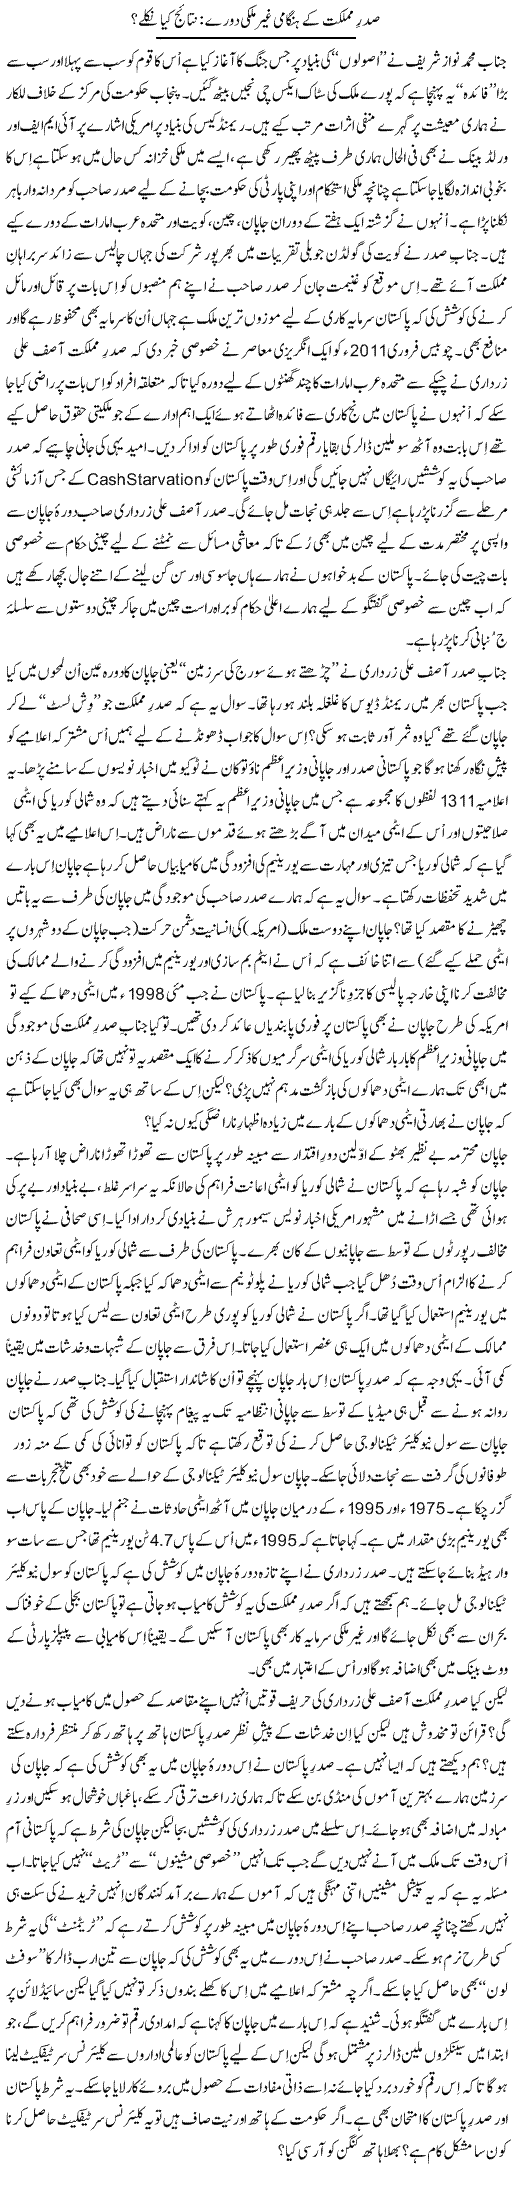 Zardari's Foreign Tours Express Column Tanvir Qasir 3 March 2011